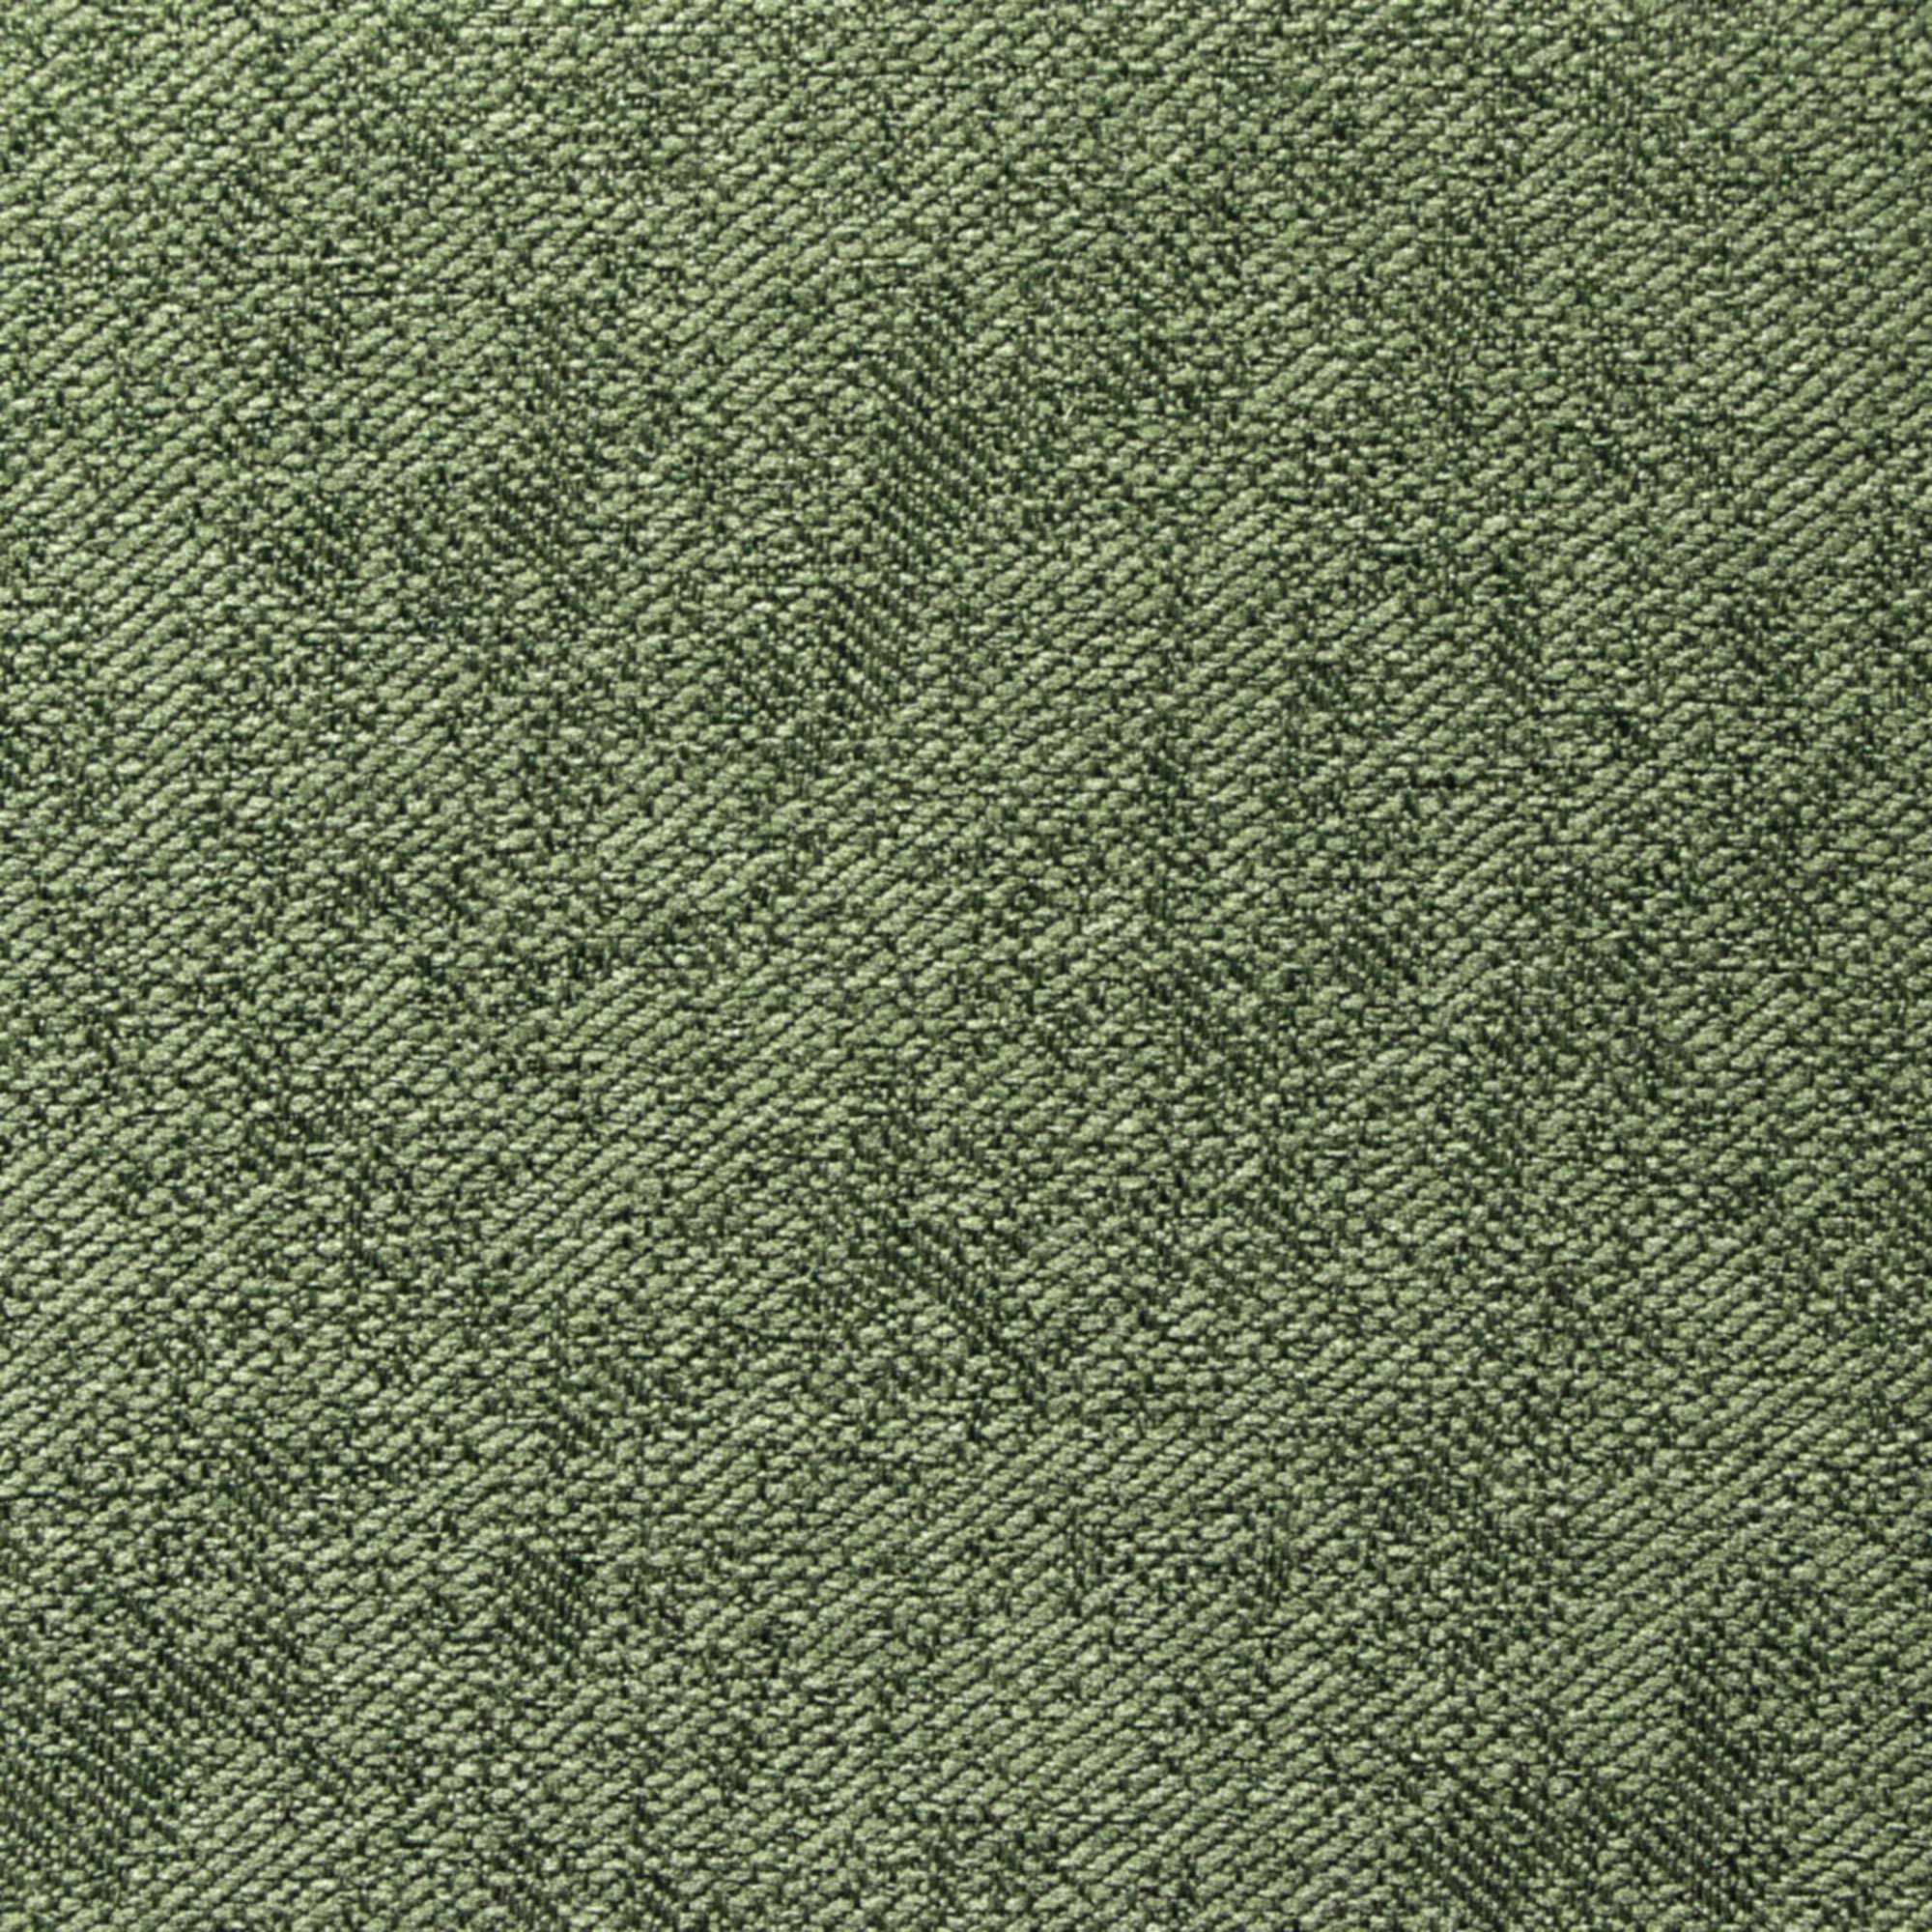 Диван большой Новый век модест 4 гарсиа грас, размер 162х195 - фото 5